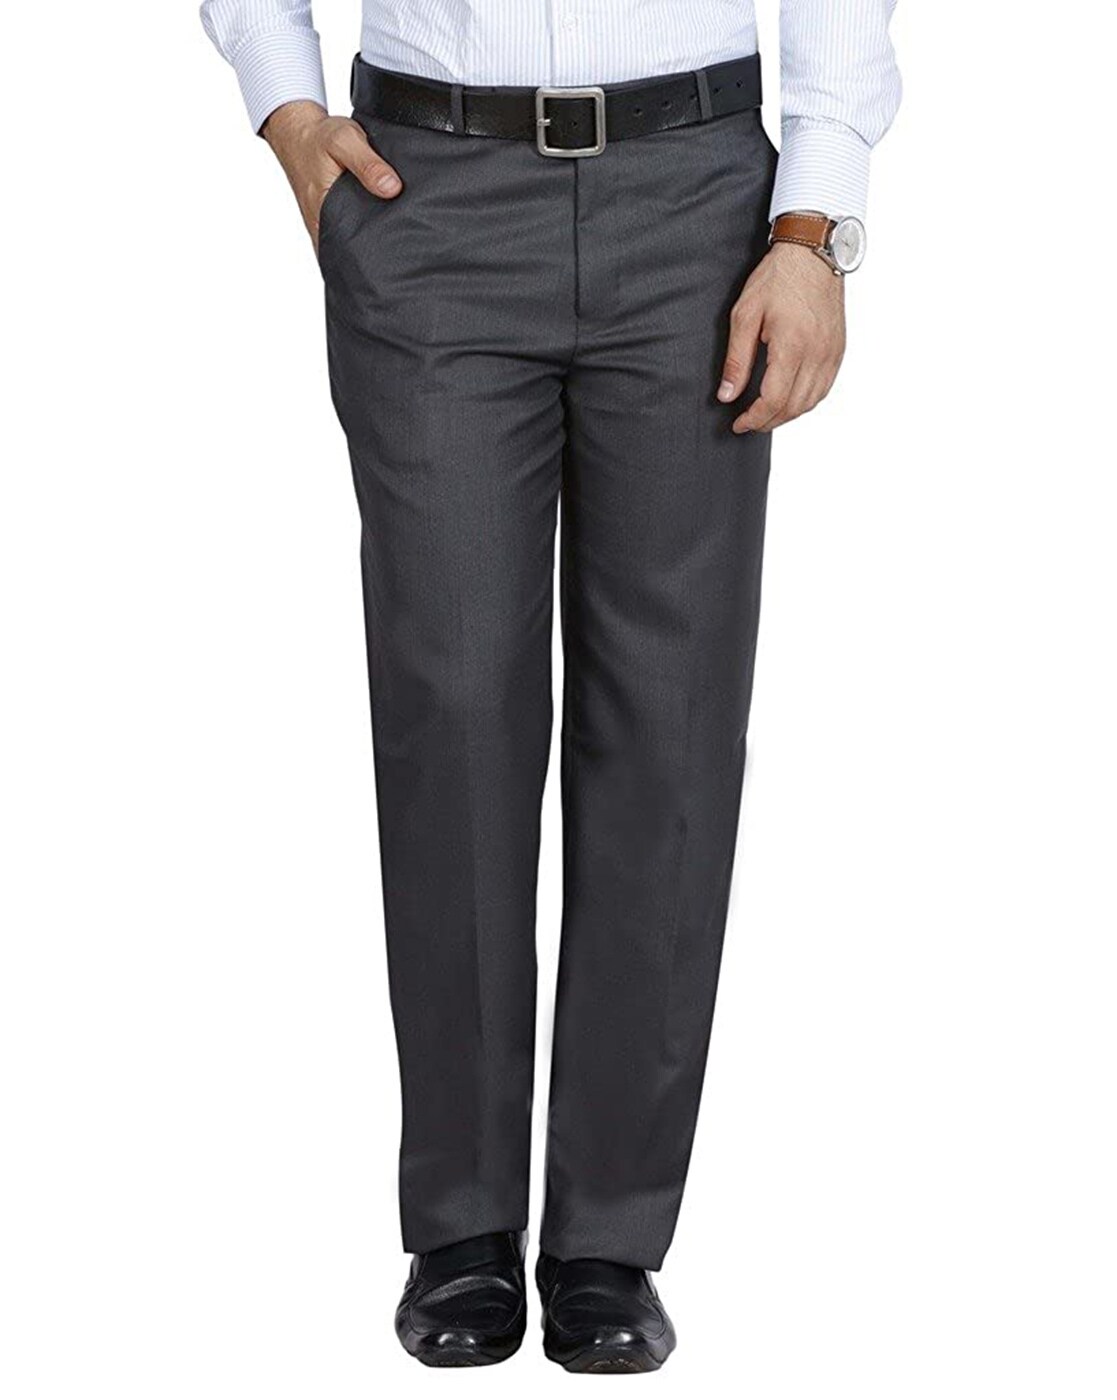 Charcoal Grey Pants | vlr.eng.br